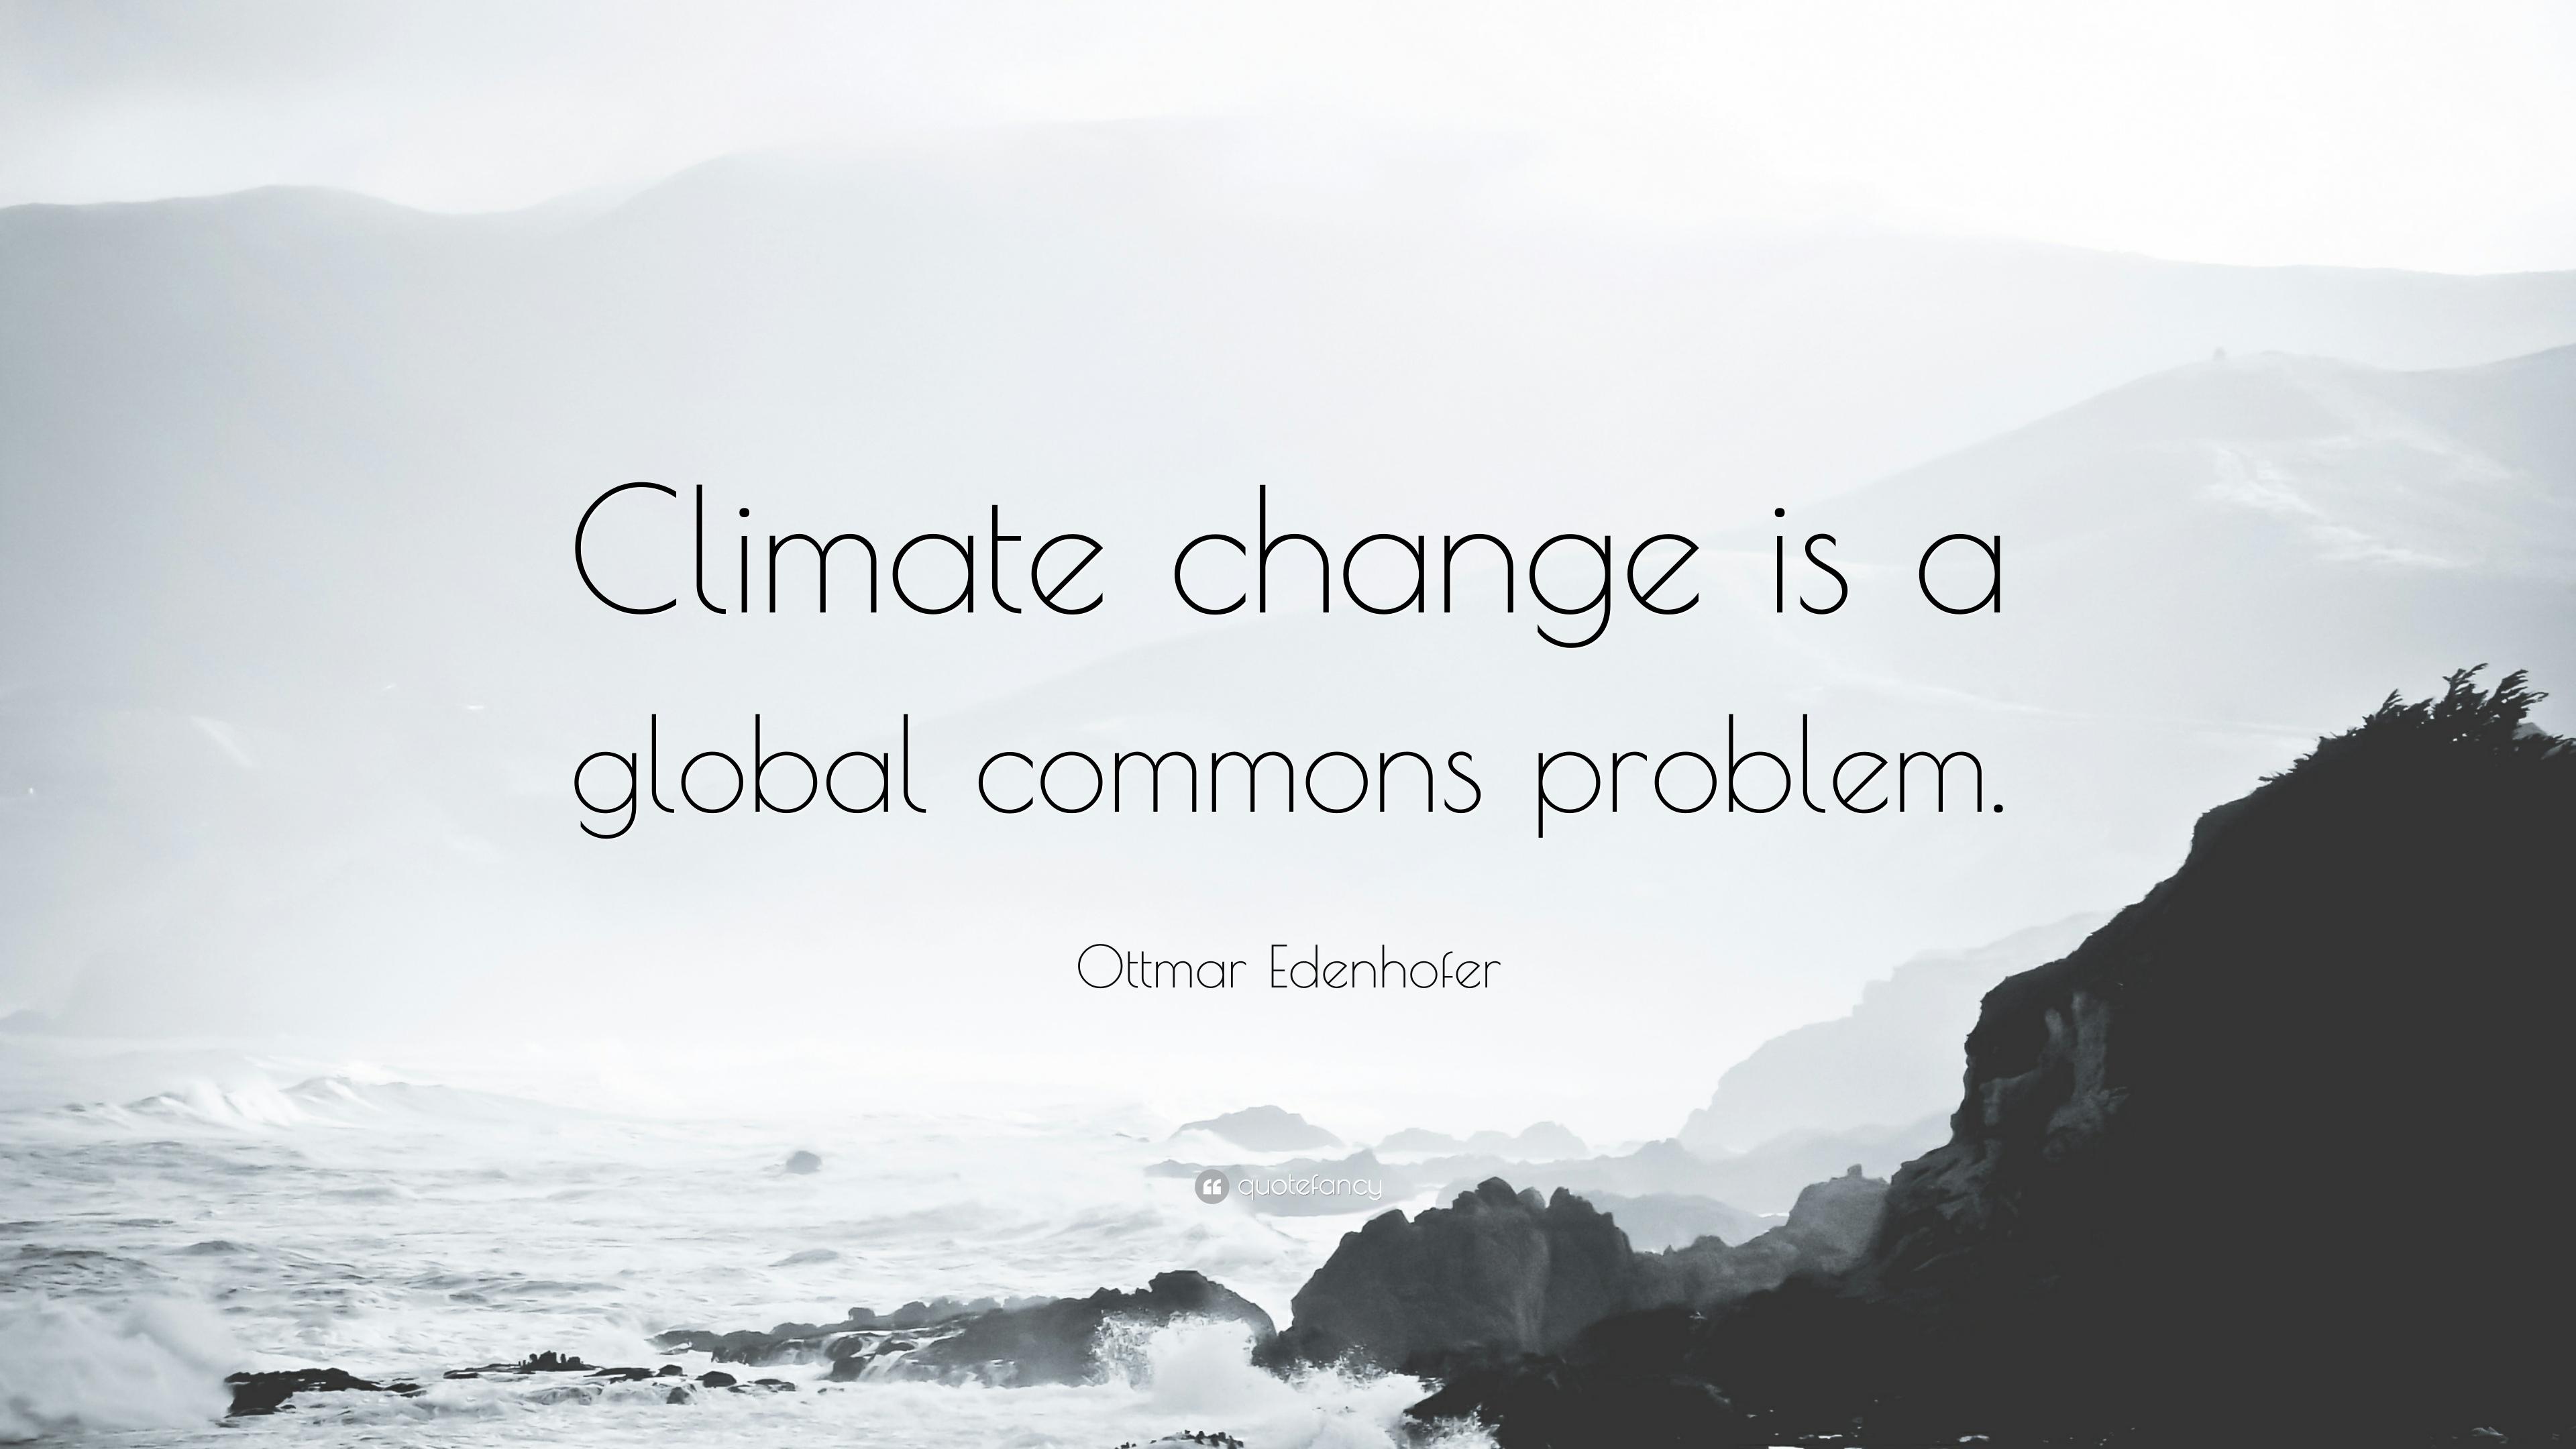 Ottmar Edenhofer Quote: “Climate change is a global commons problem